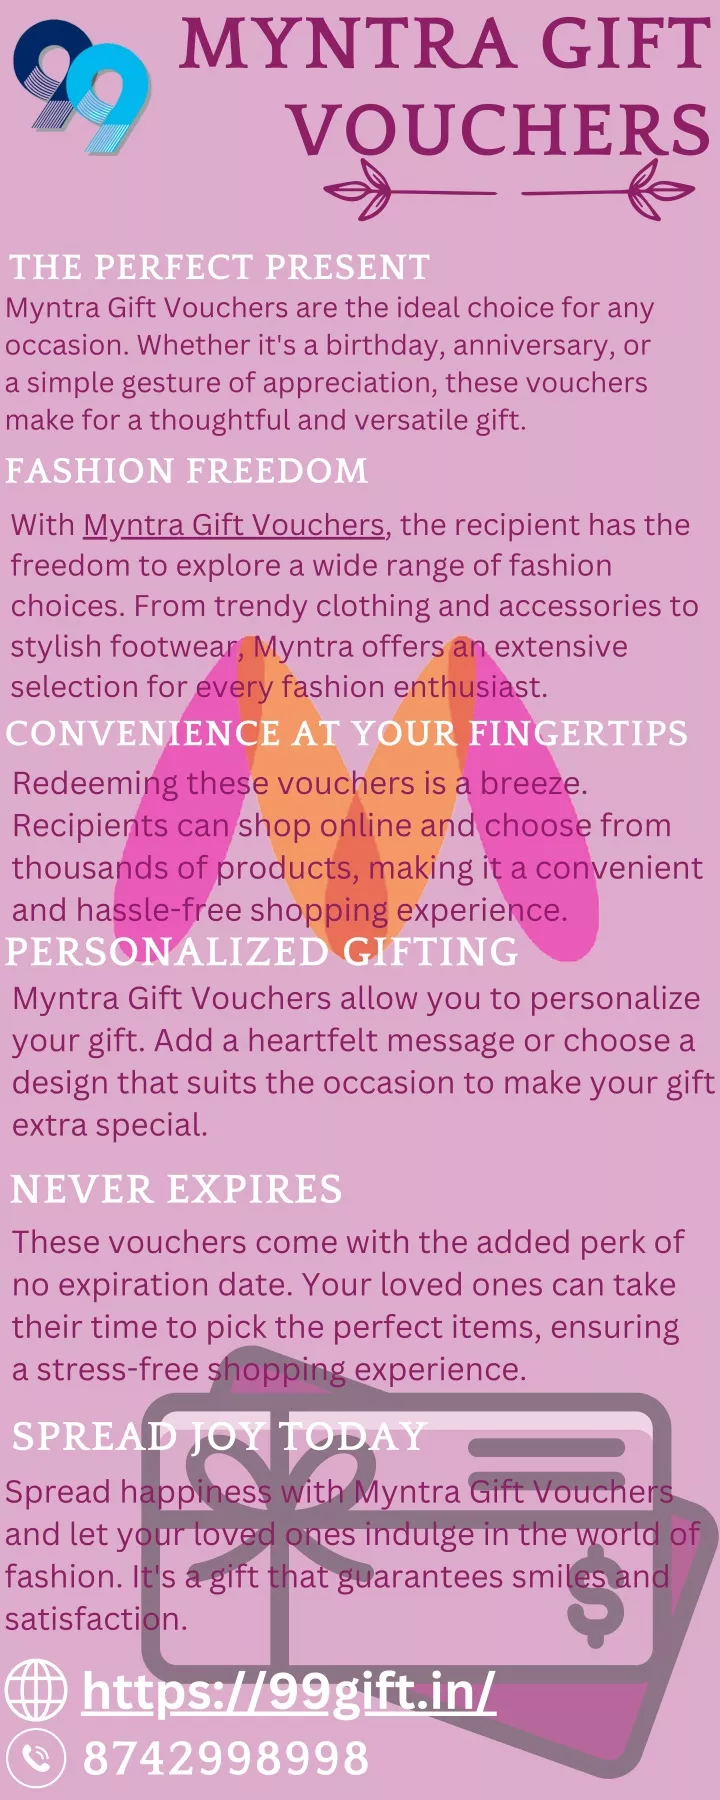 myntra gift vouchers